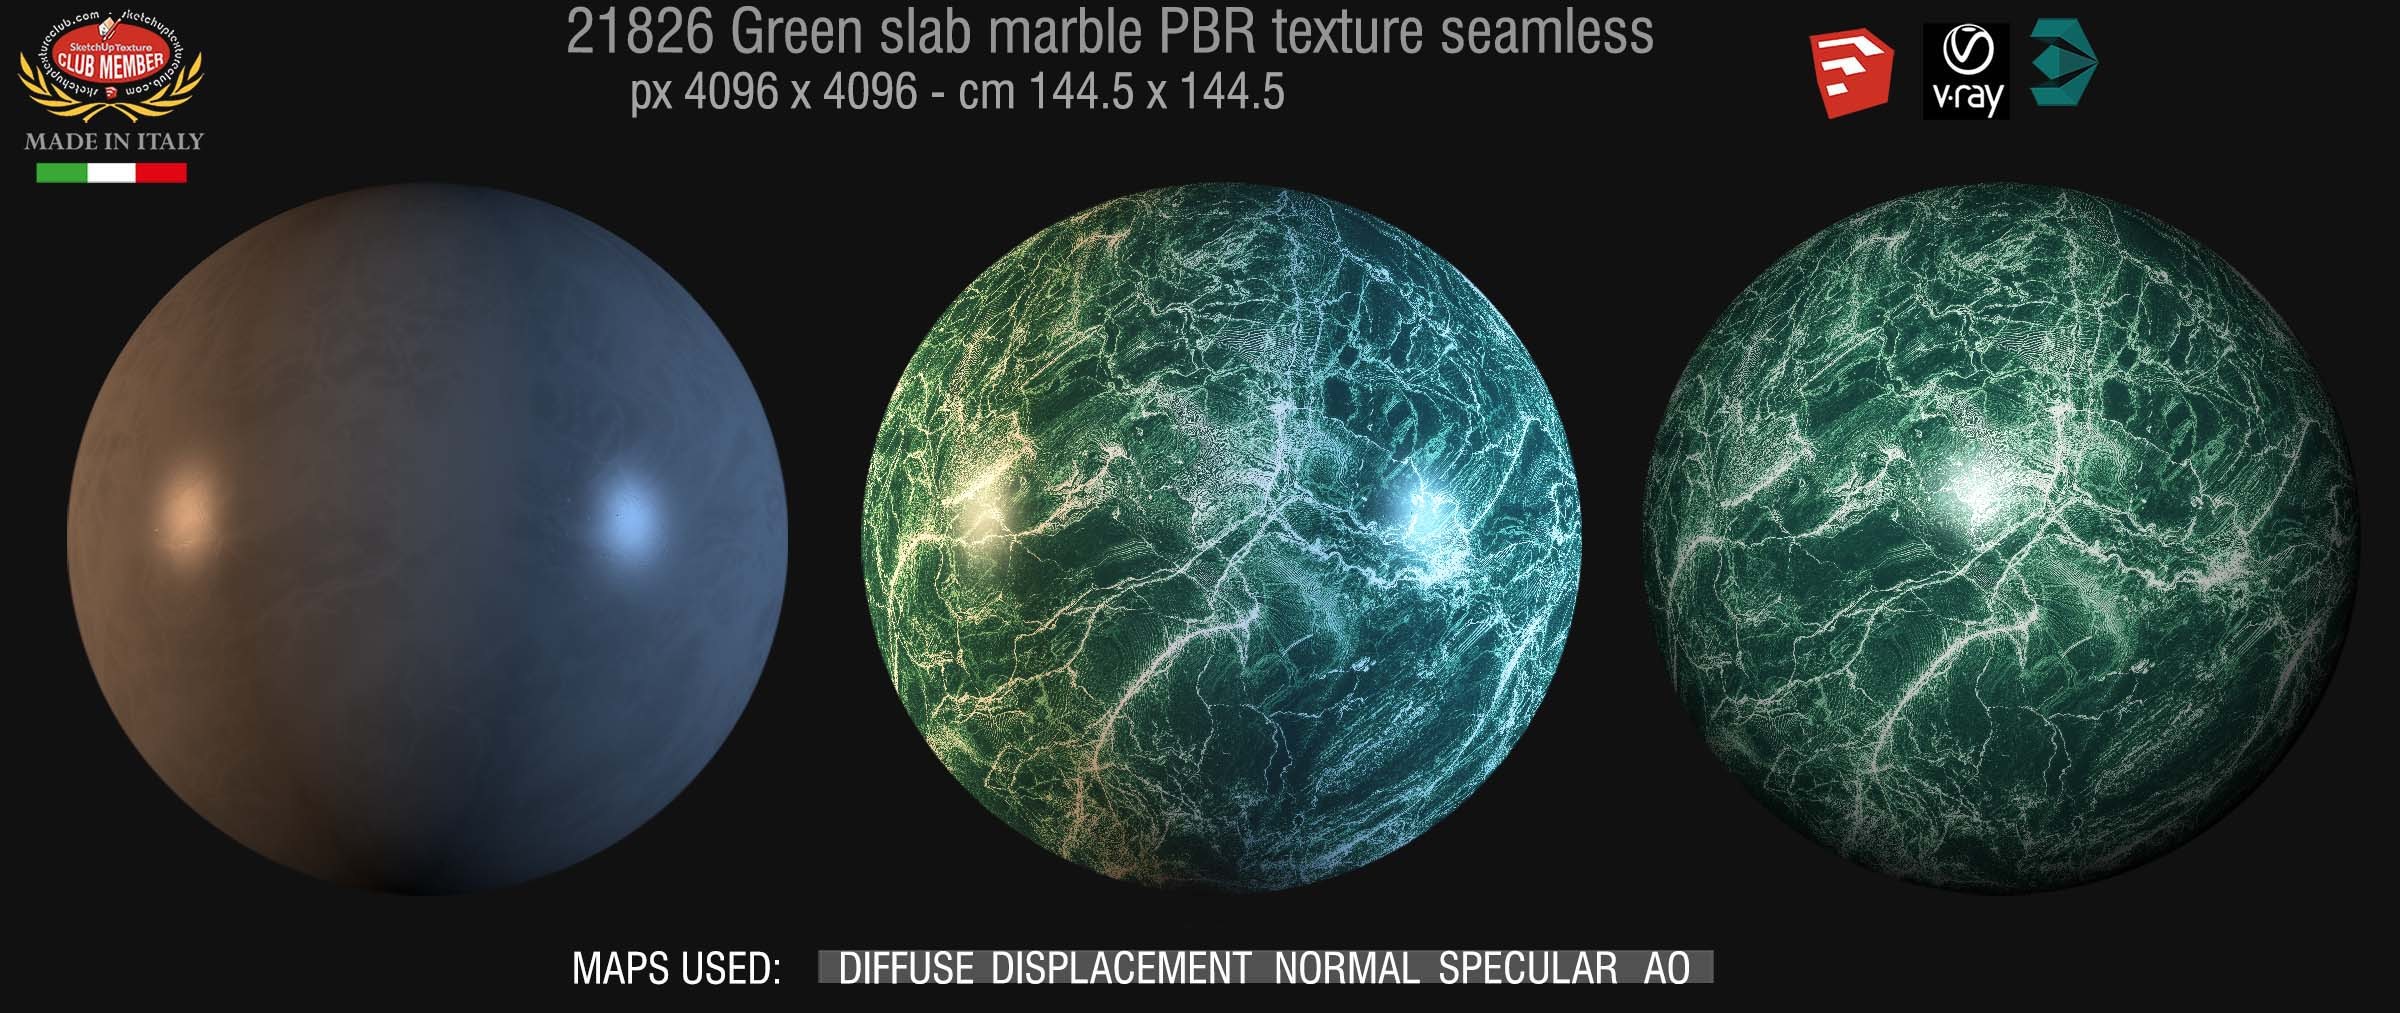 21826 green slab marble PBR texture seamless DEMO